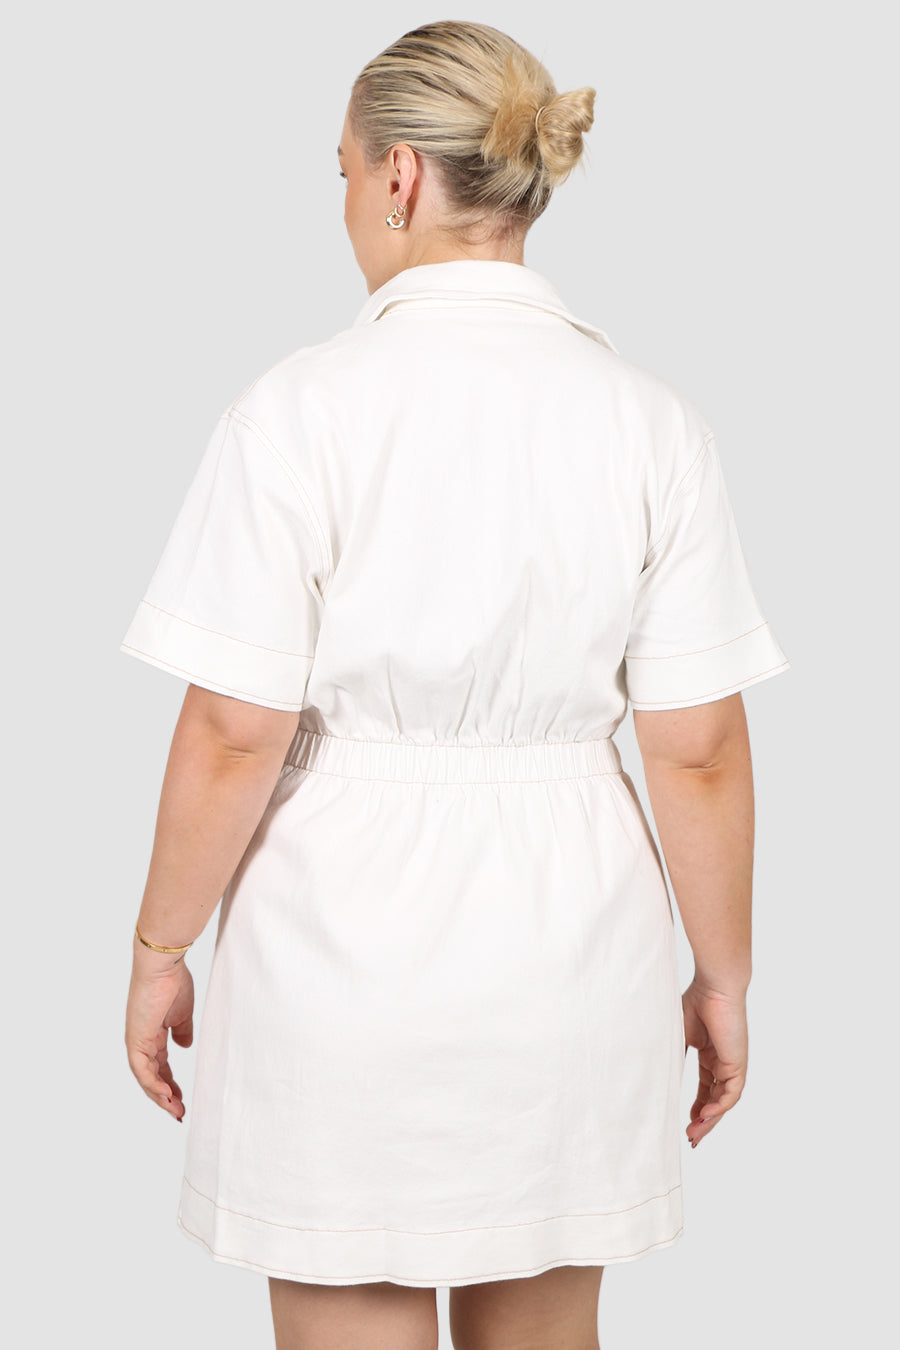 SAVEIRA DENIM DRESS WHITE